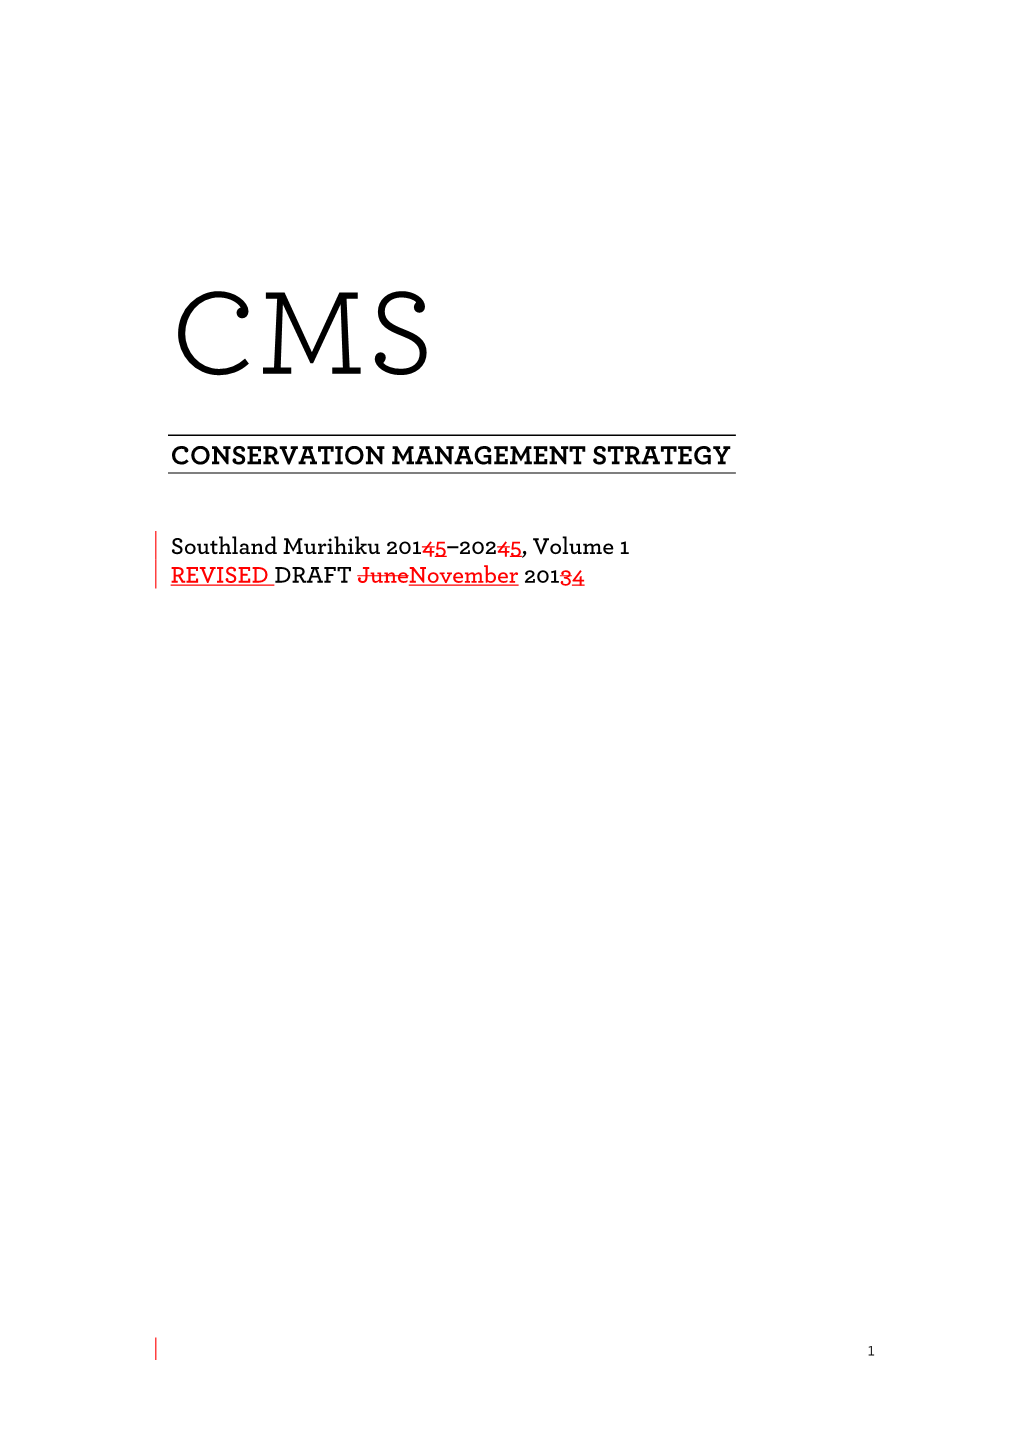 CMS for Southland Murihiku 2015–2025, Volume 1